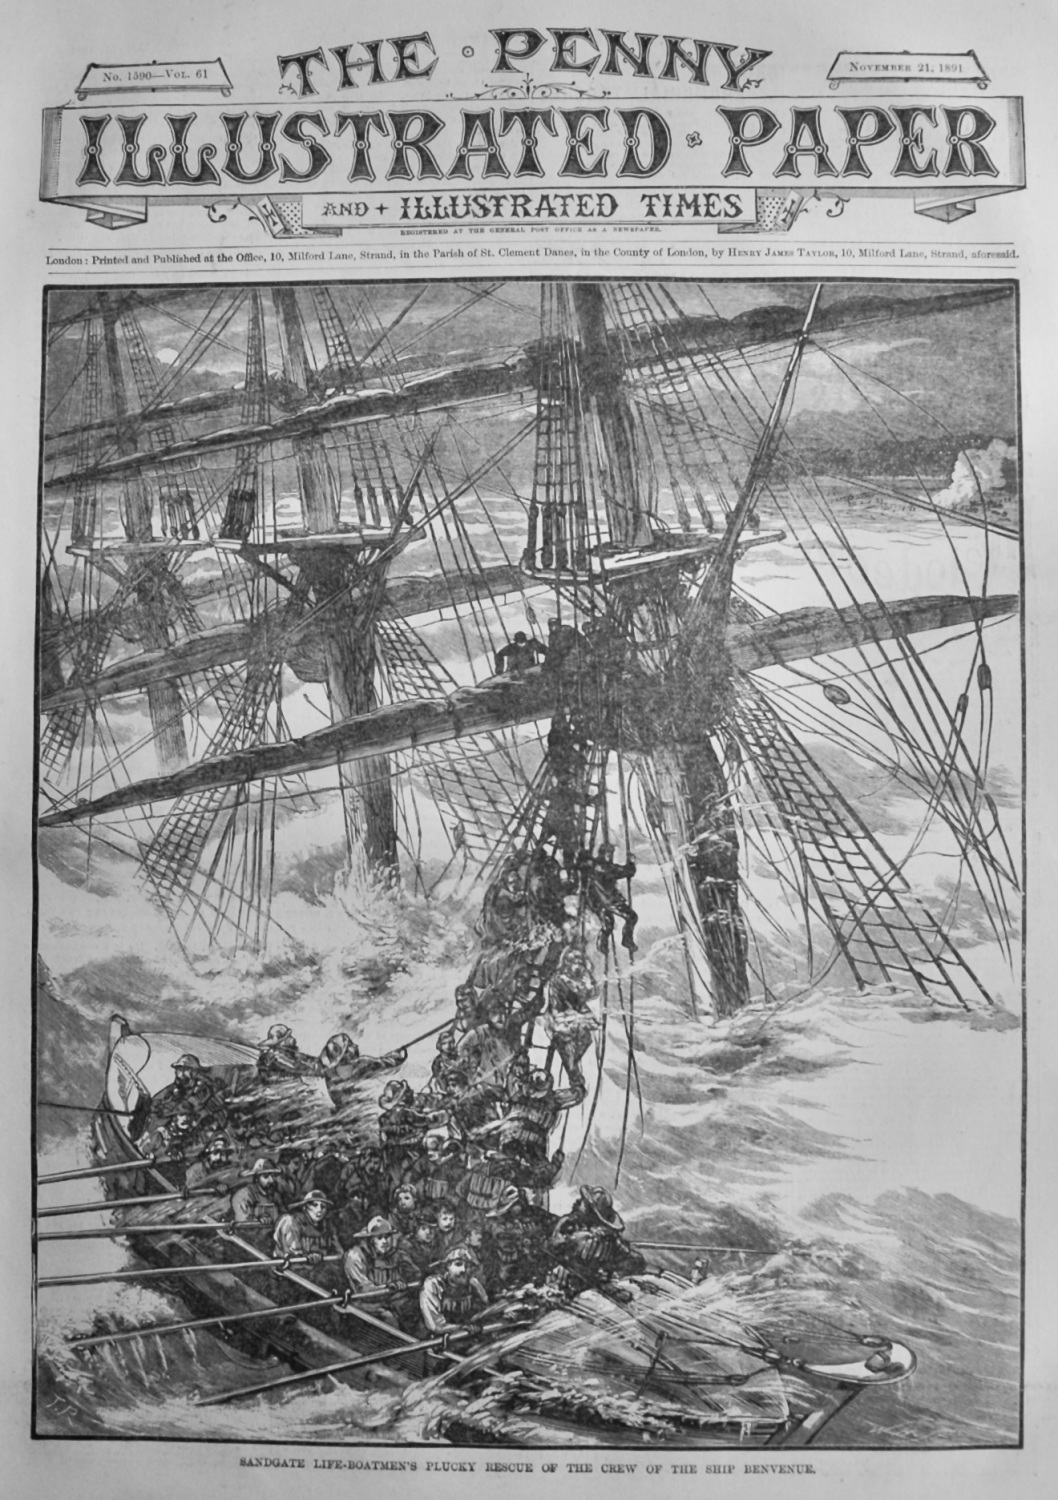 Sandgate Life-Boatmen's Plucky Rescue of the Crew of the Ship Benvenue.  18